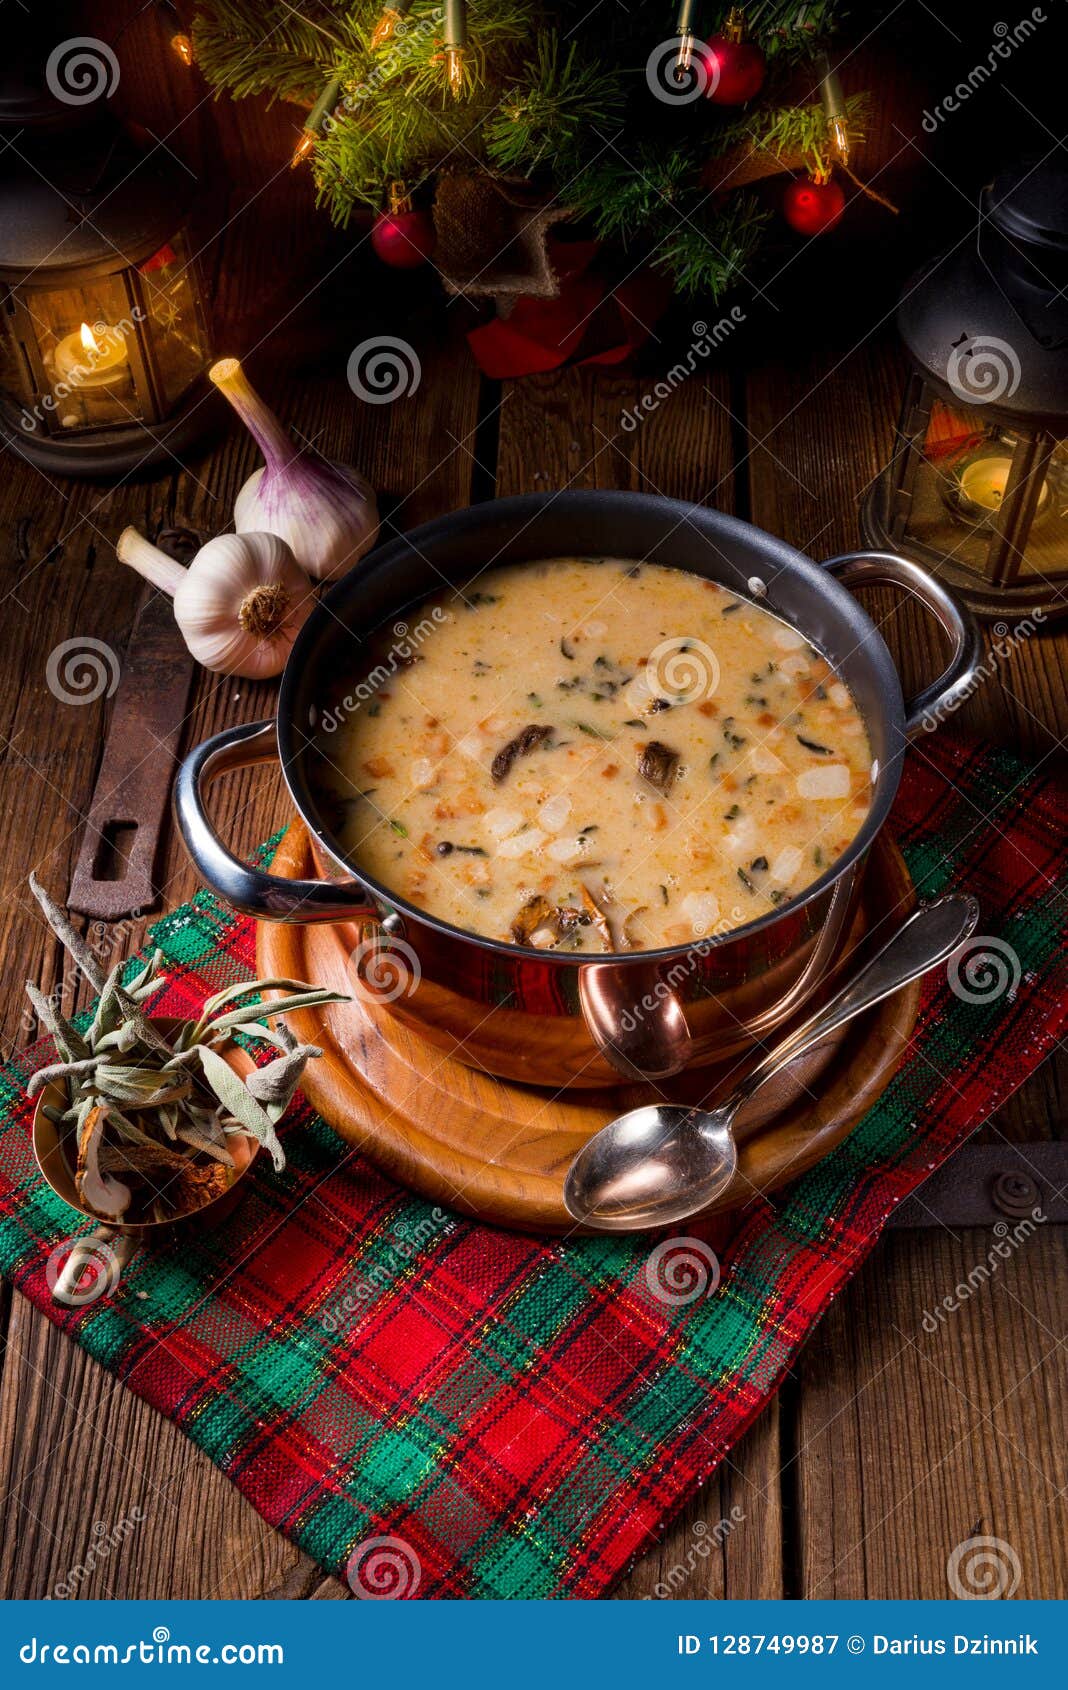 Christmas Mushroom Soup of Polish Style Stock Image - Image of dish ...